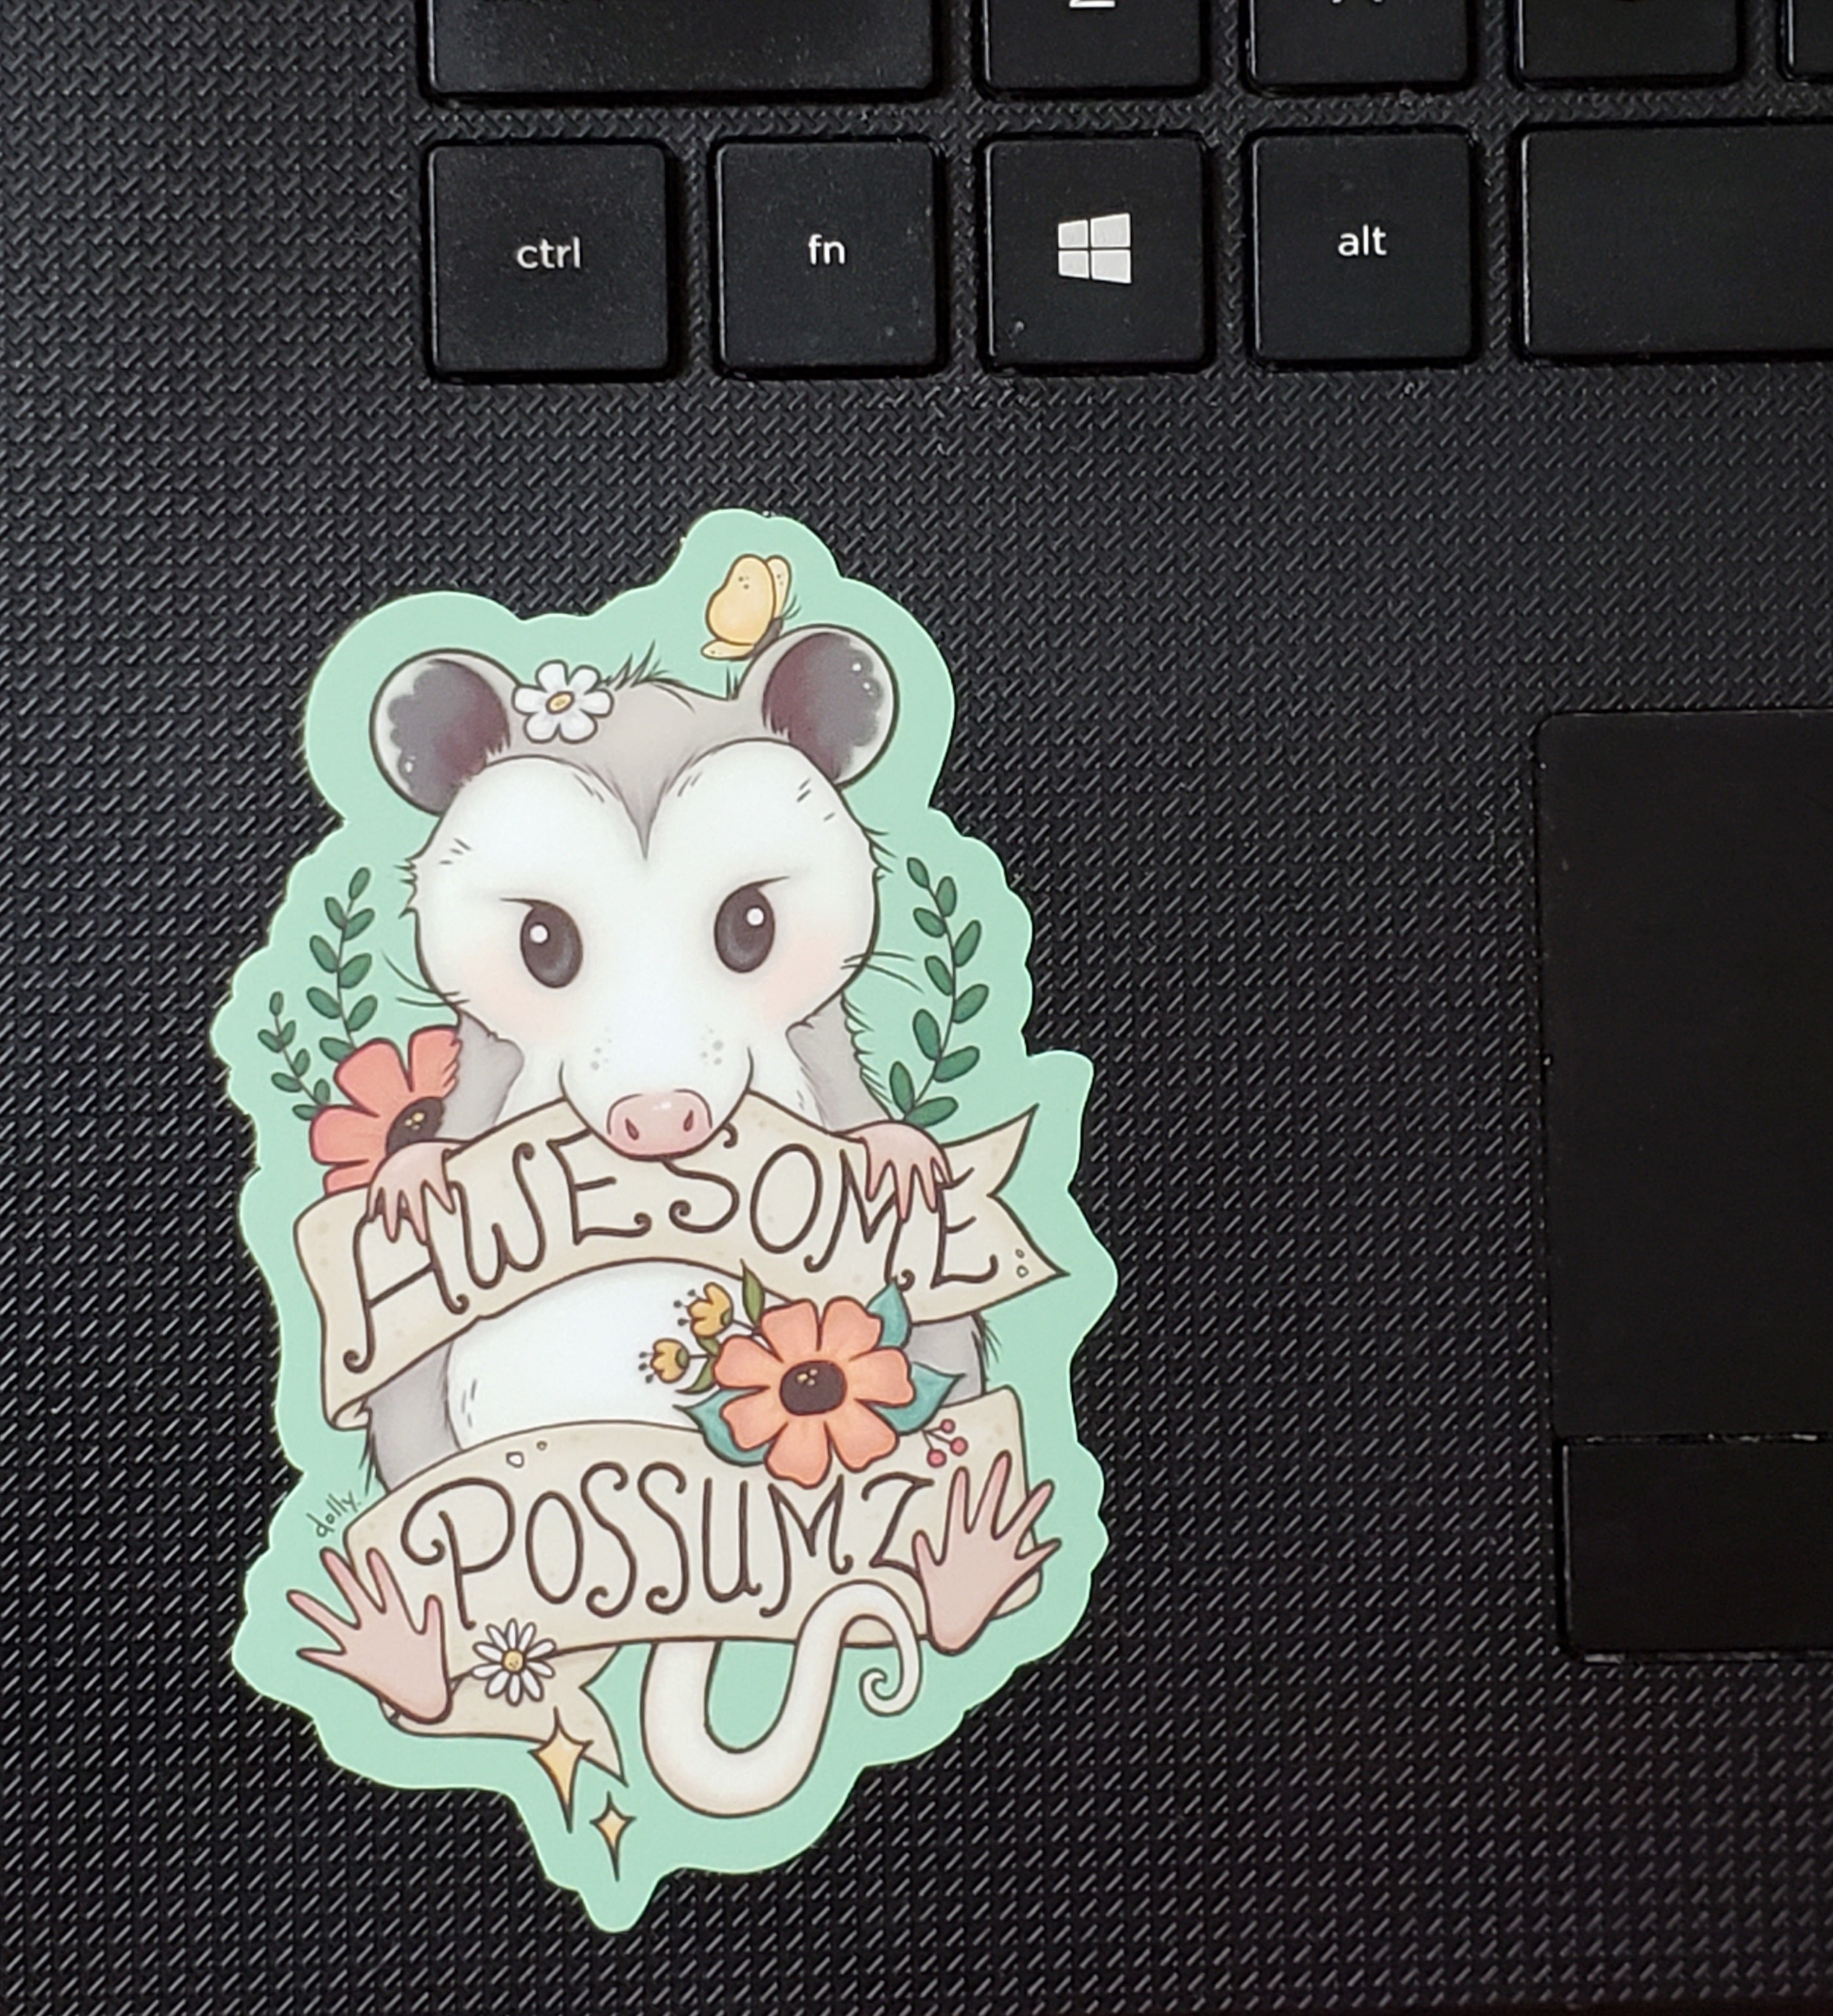 Awesome Possumz Sticker